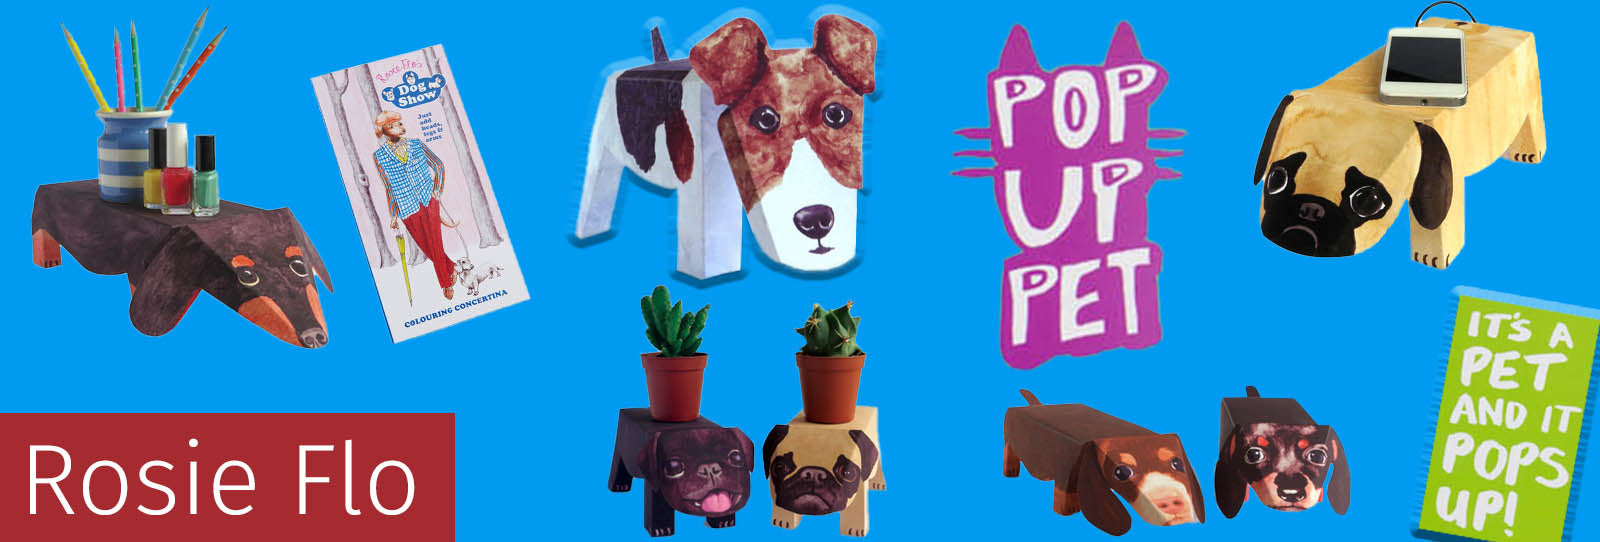 Rosie Flo - Pop Up Pets